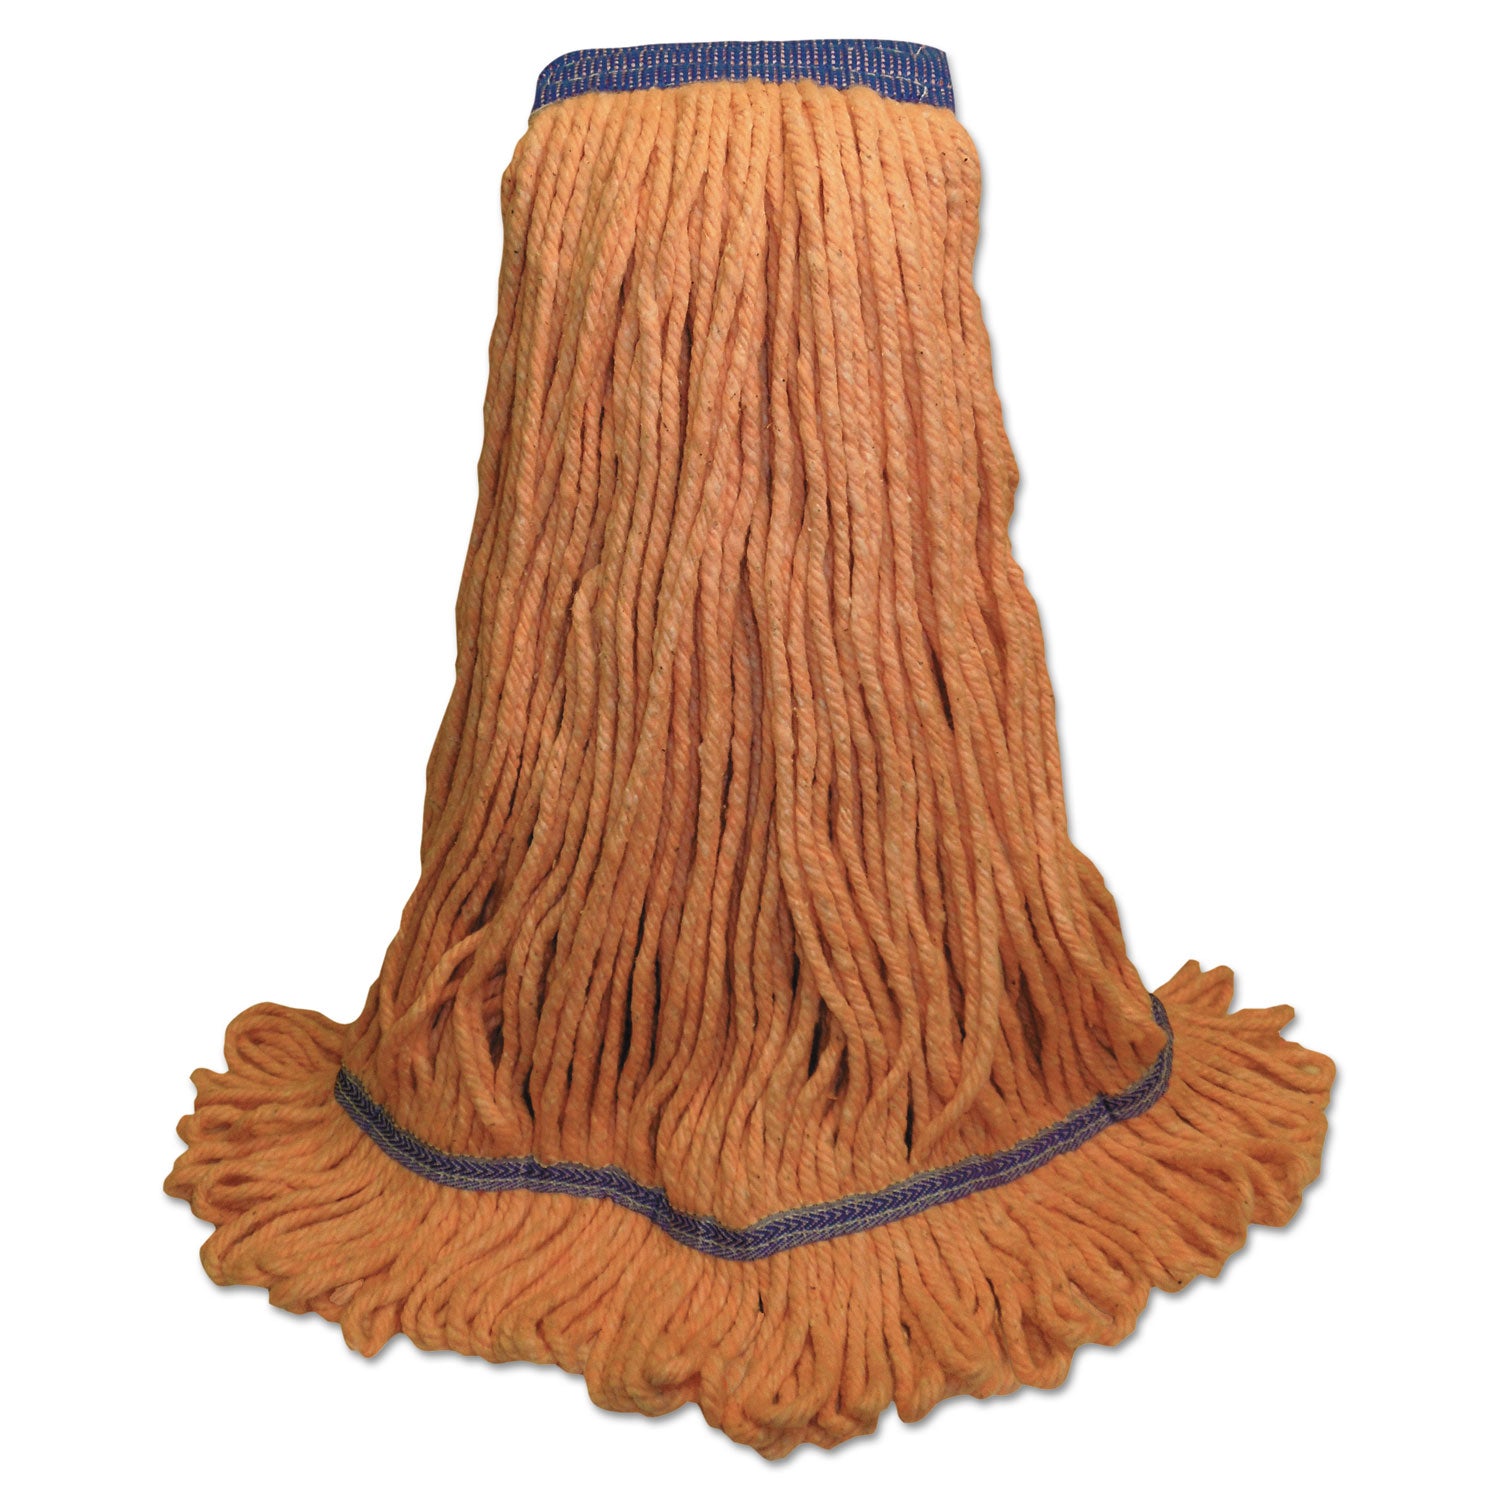 super-loop-wet-mop-head-cotton-synthetic-fiber-5-headband-x-large-size-orange-12-carton_bwk504or - 1